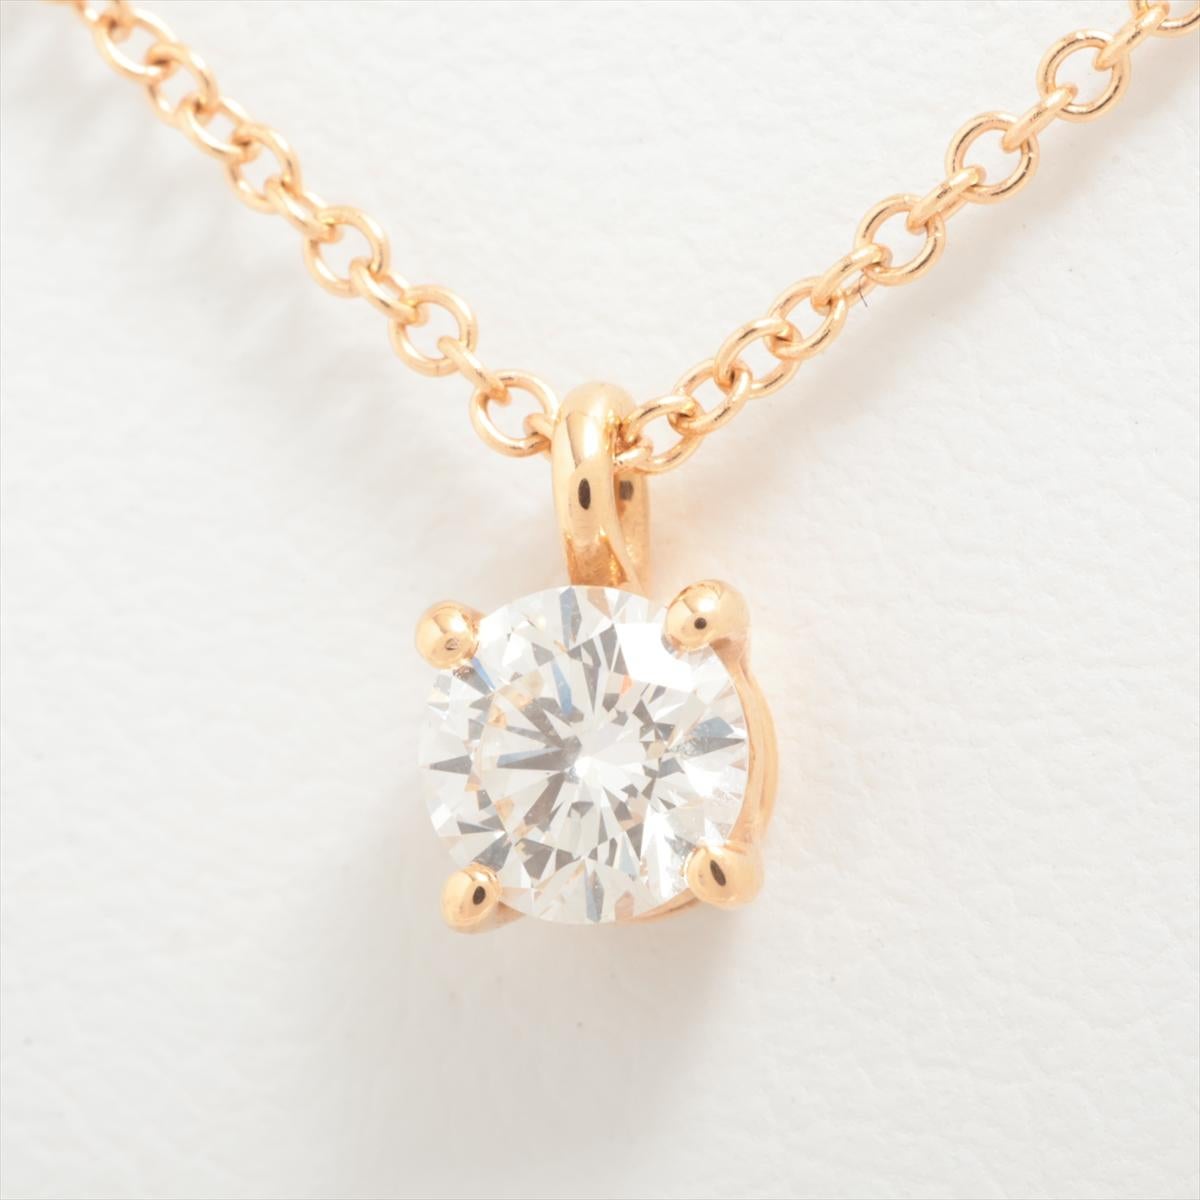  Tiffany Solitaire Diamond Necklace  1